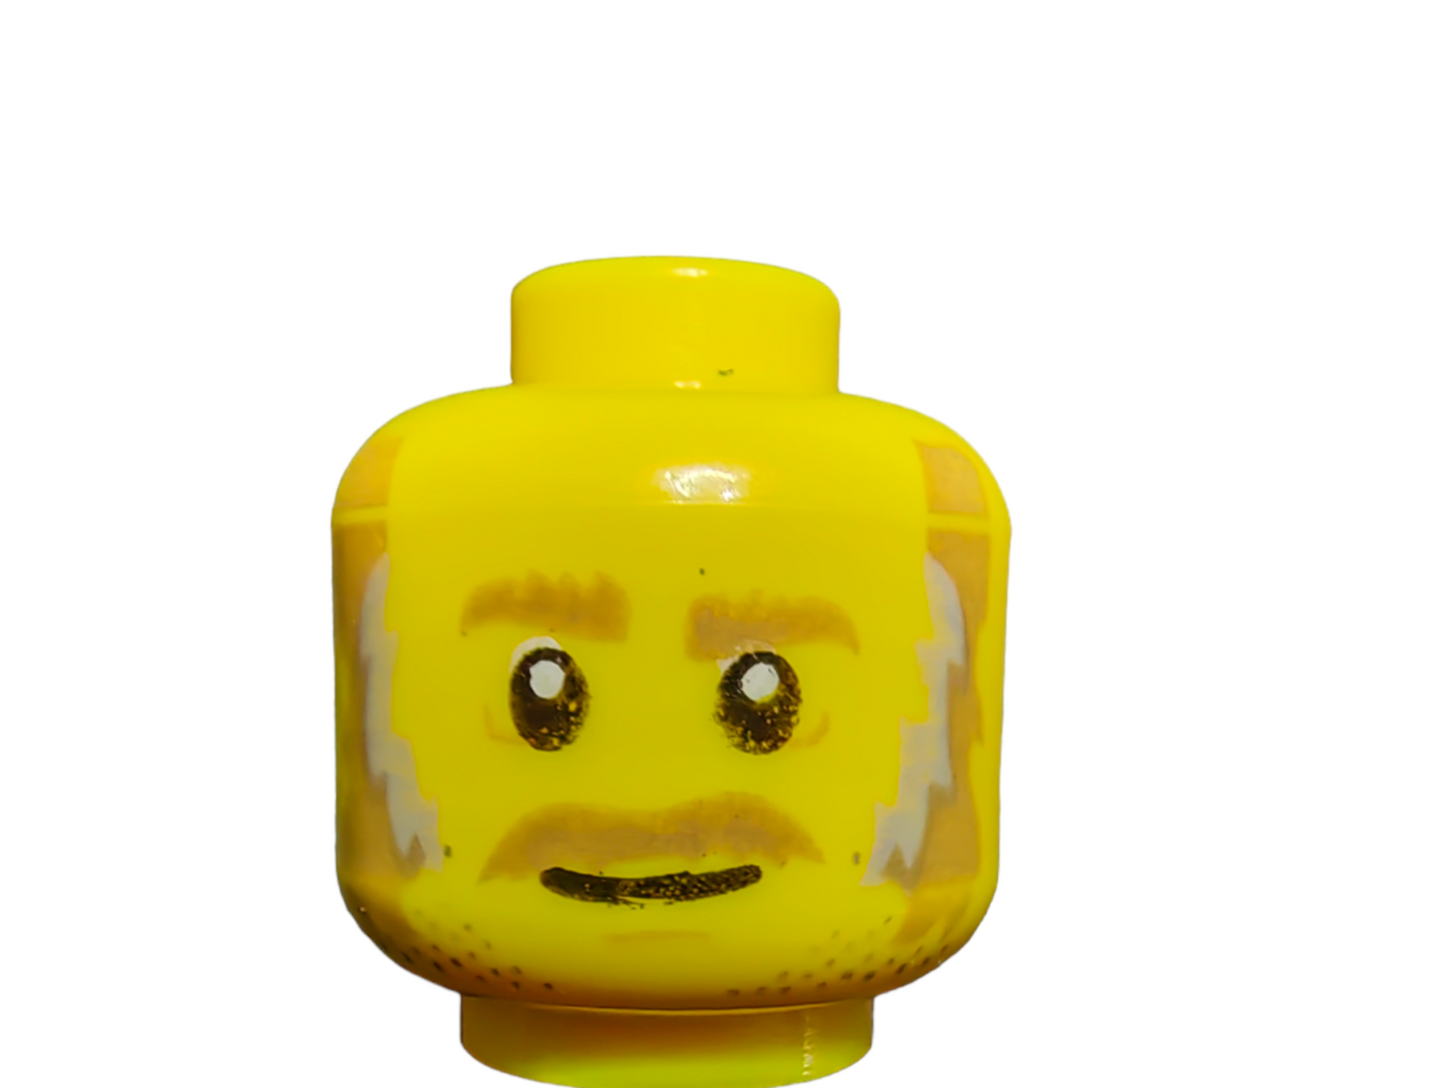 LEGO Head, Tan Eyebrows and Moustache, Tan and Grey Sideburns - UB1071